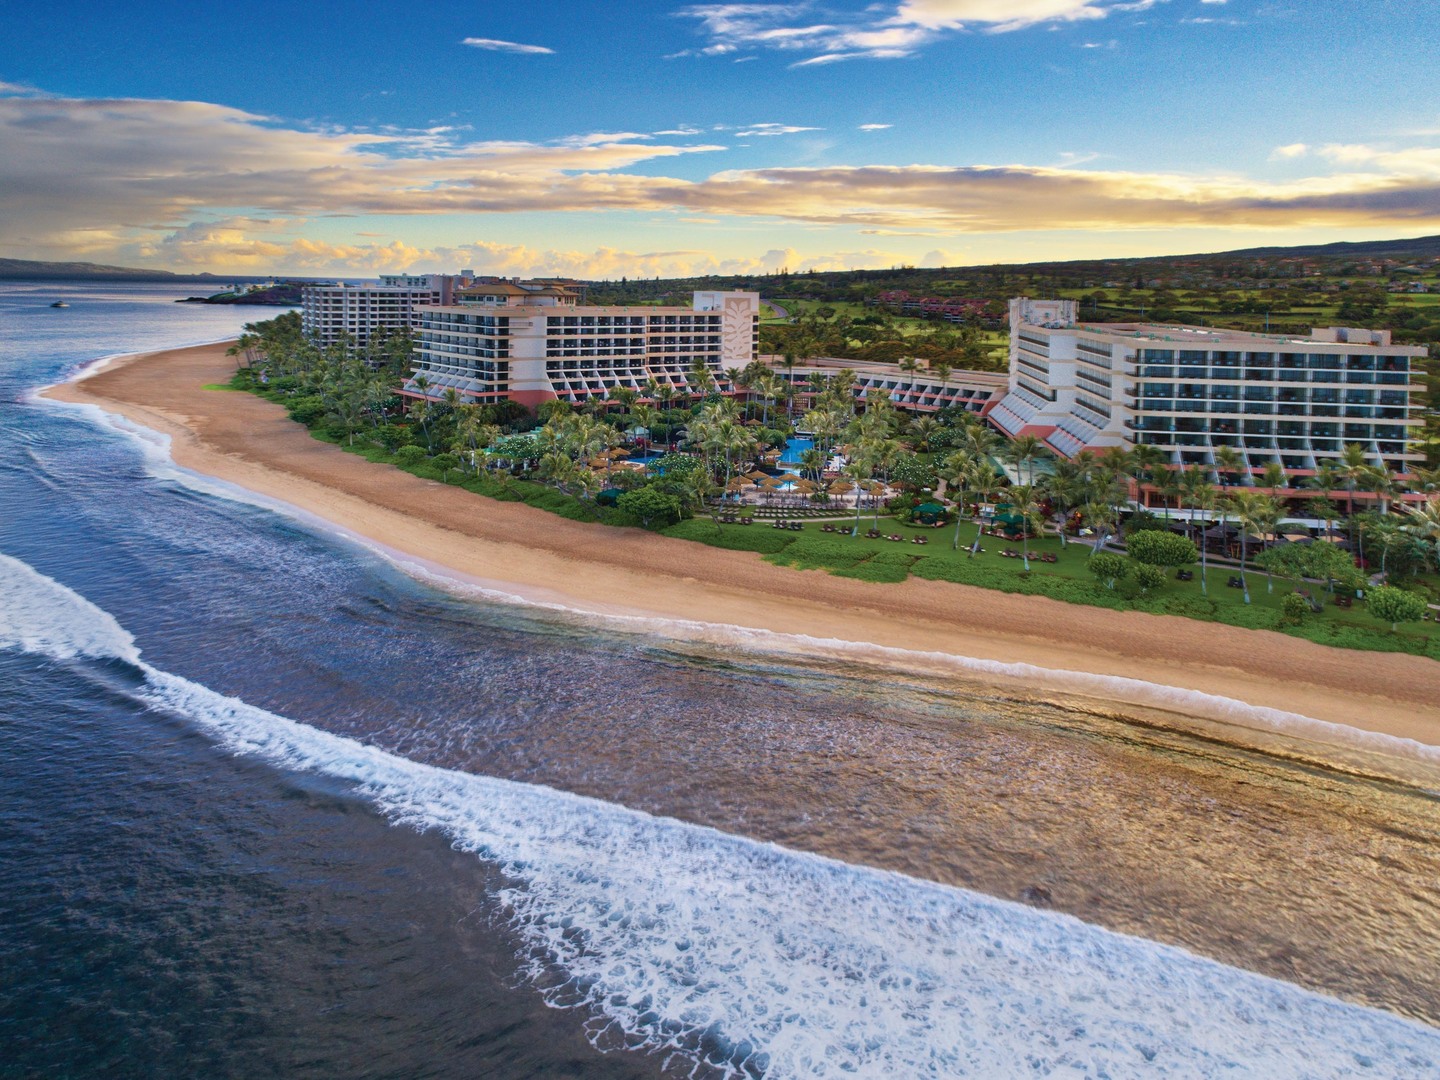 Marriott's Maui Ocean Club - Molokai, Maui, and Lanai Towers Aerial View, Beachfront Resort Exterior. Marriott's Maui Ocean Club - Molokai, Maui, and Lanai Towers is located in Lāhainā, Maui, Hawai‘i United States.